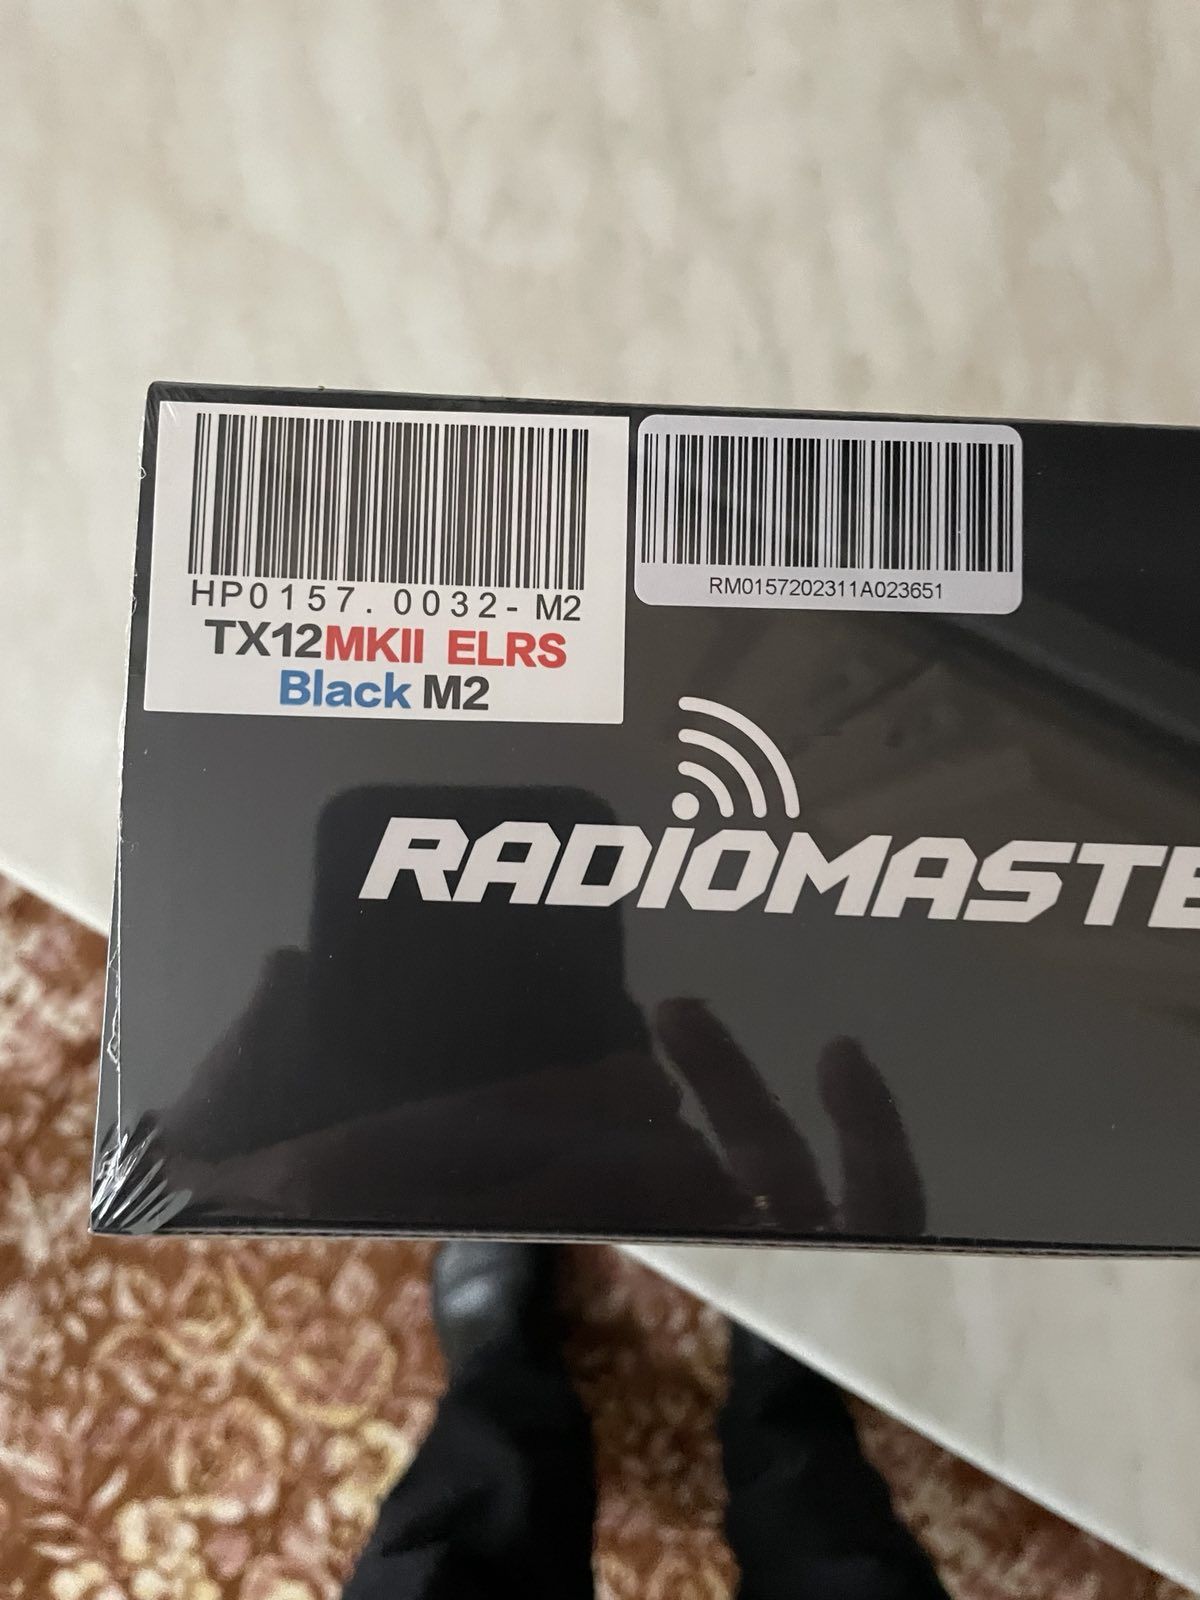 RadioMaster TX12 MKII ERLS.